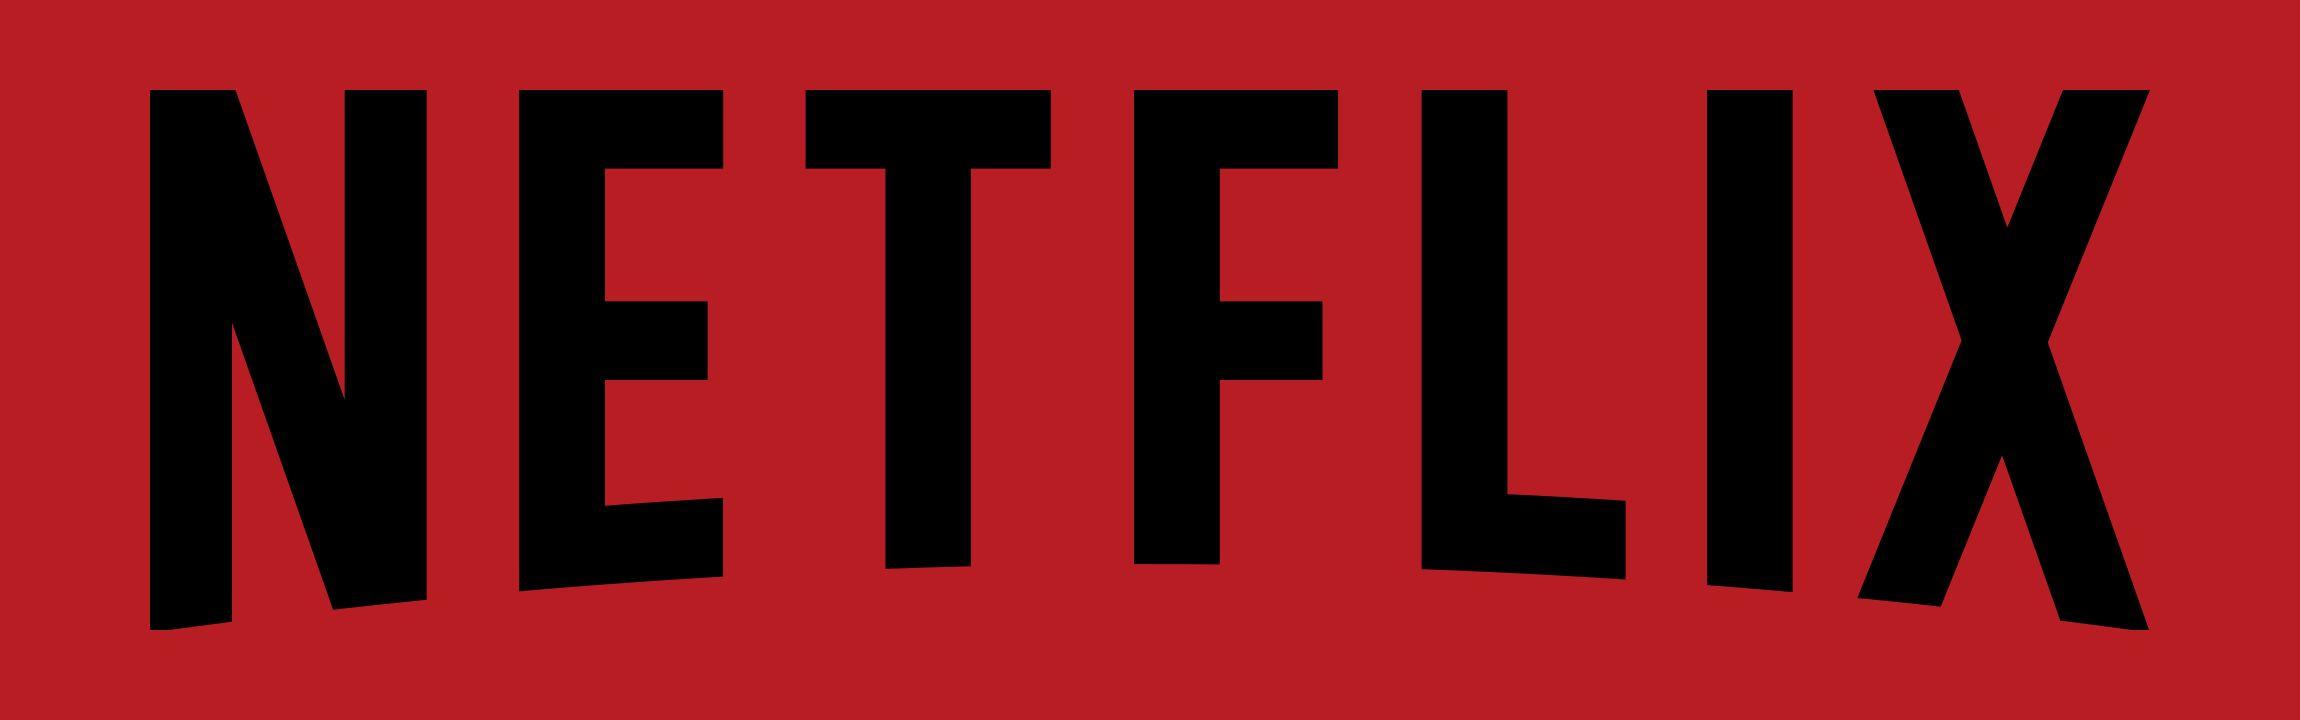 Netflix Letter Logo - Netflix Logo, Netflix Symbol, Meaning, History and Evolution